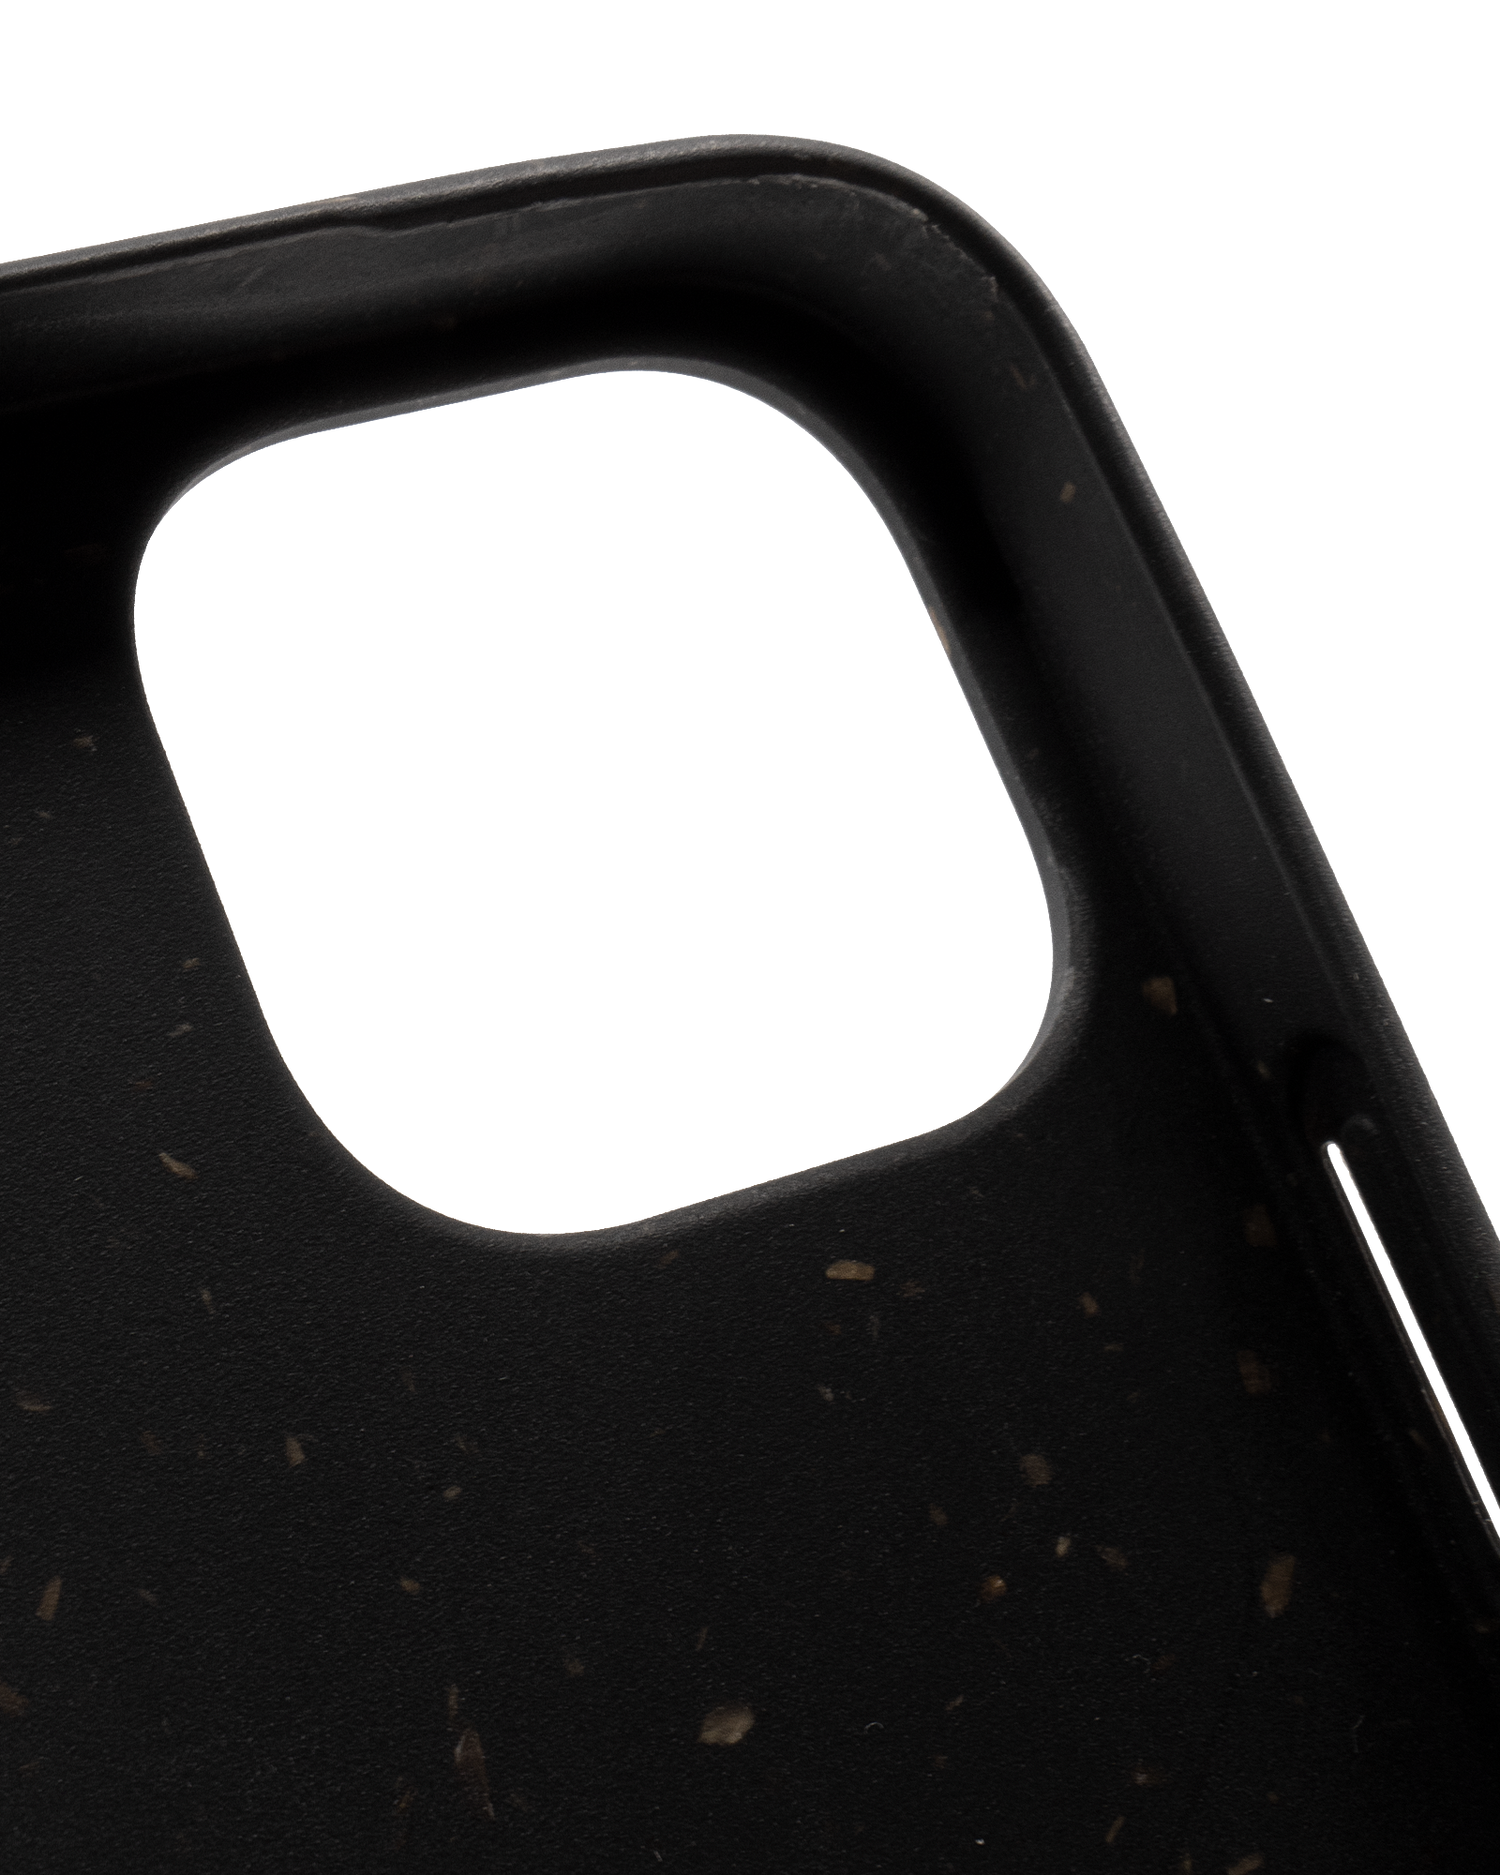 Black Eco-Friendly Phone Case for Apple iPhone 13 mini: Details inside